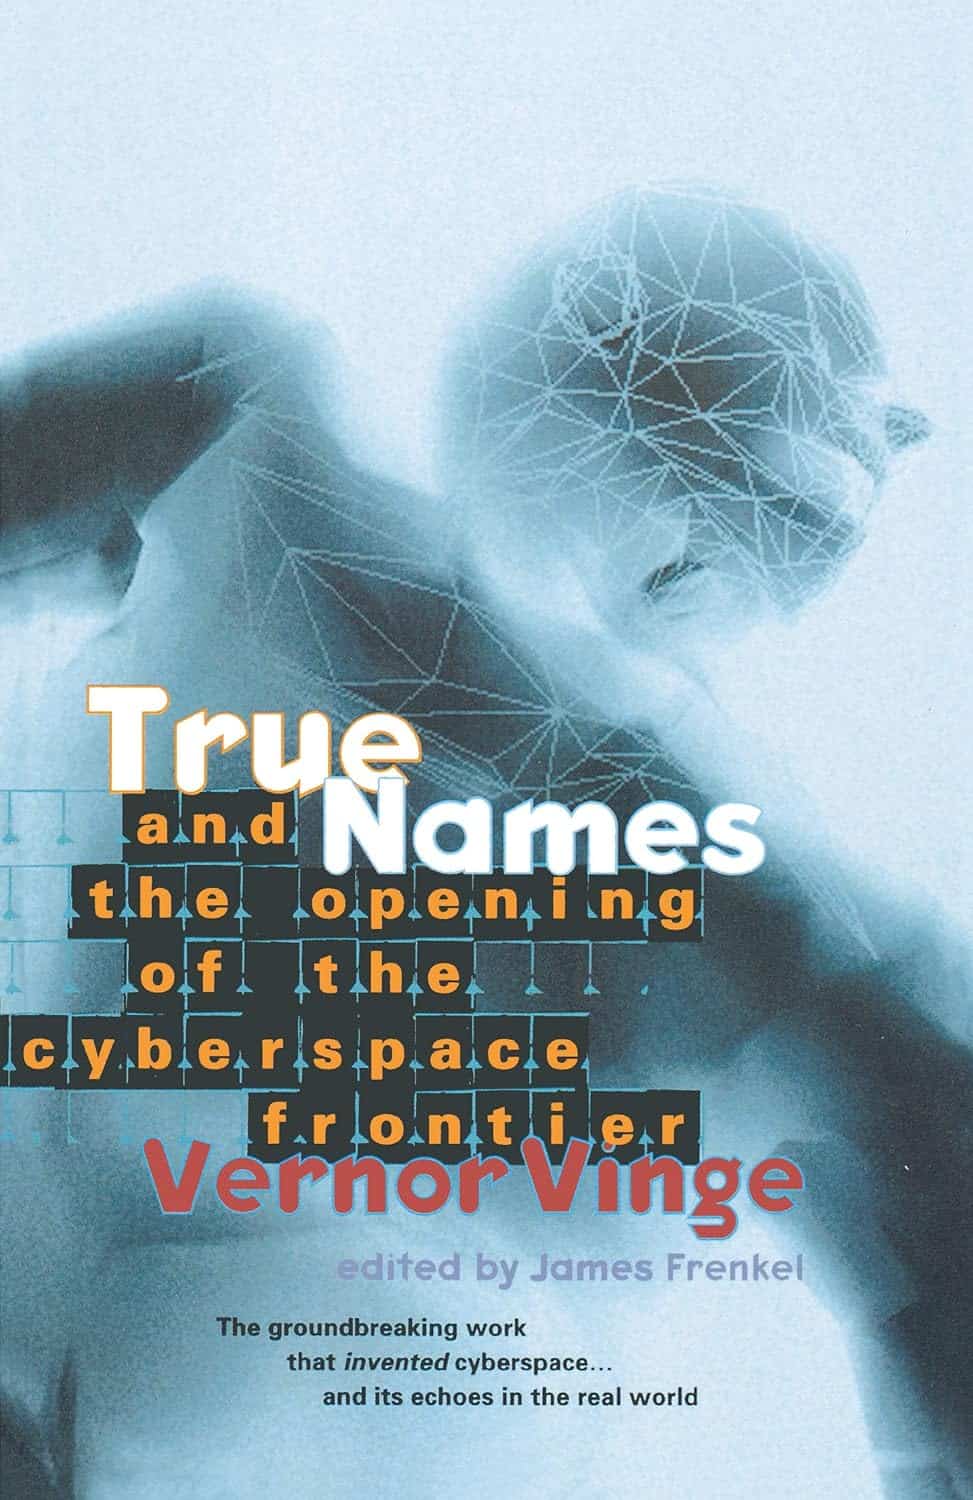 True Names by Vernor Vinge (1981)